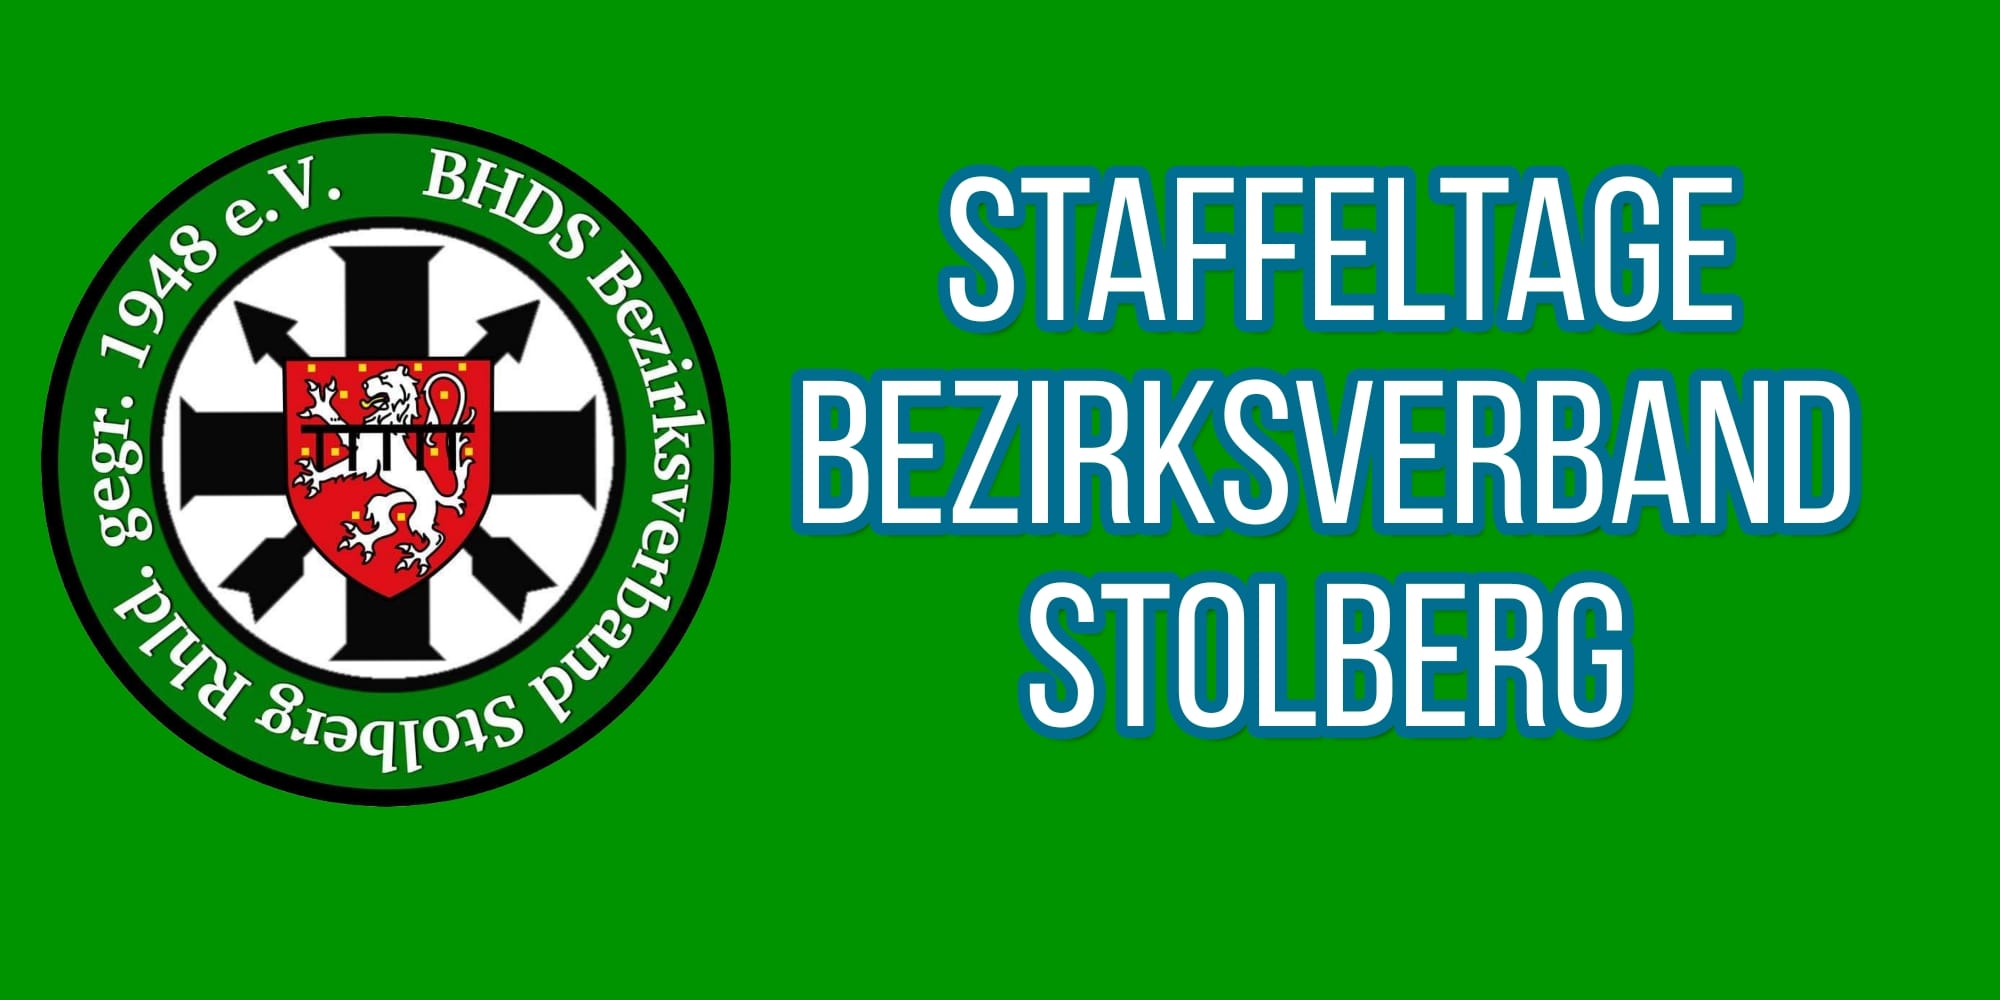 Staffeltage Bezirksverband Stolberg